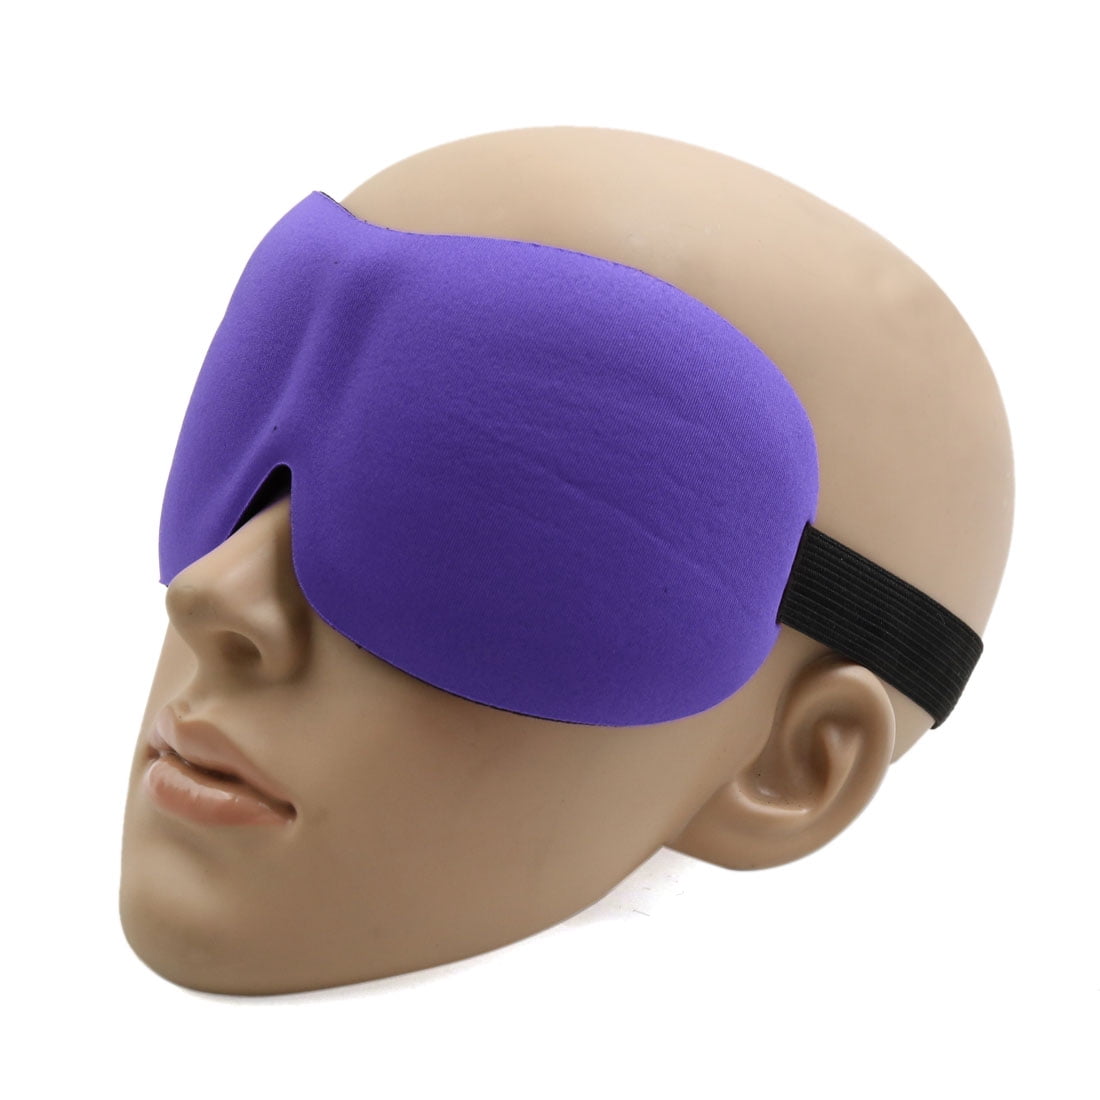 19cmx8.5cm, Black Lanhui 1PC New Pure Silk Sleep Eye Mask Padded Shade Cover Travel Relax Aid Helps You Sleep Better